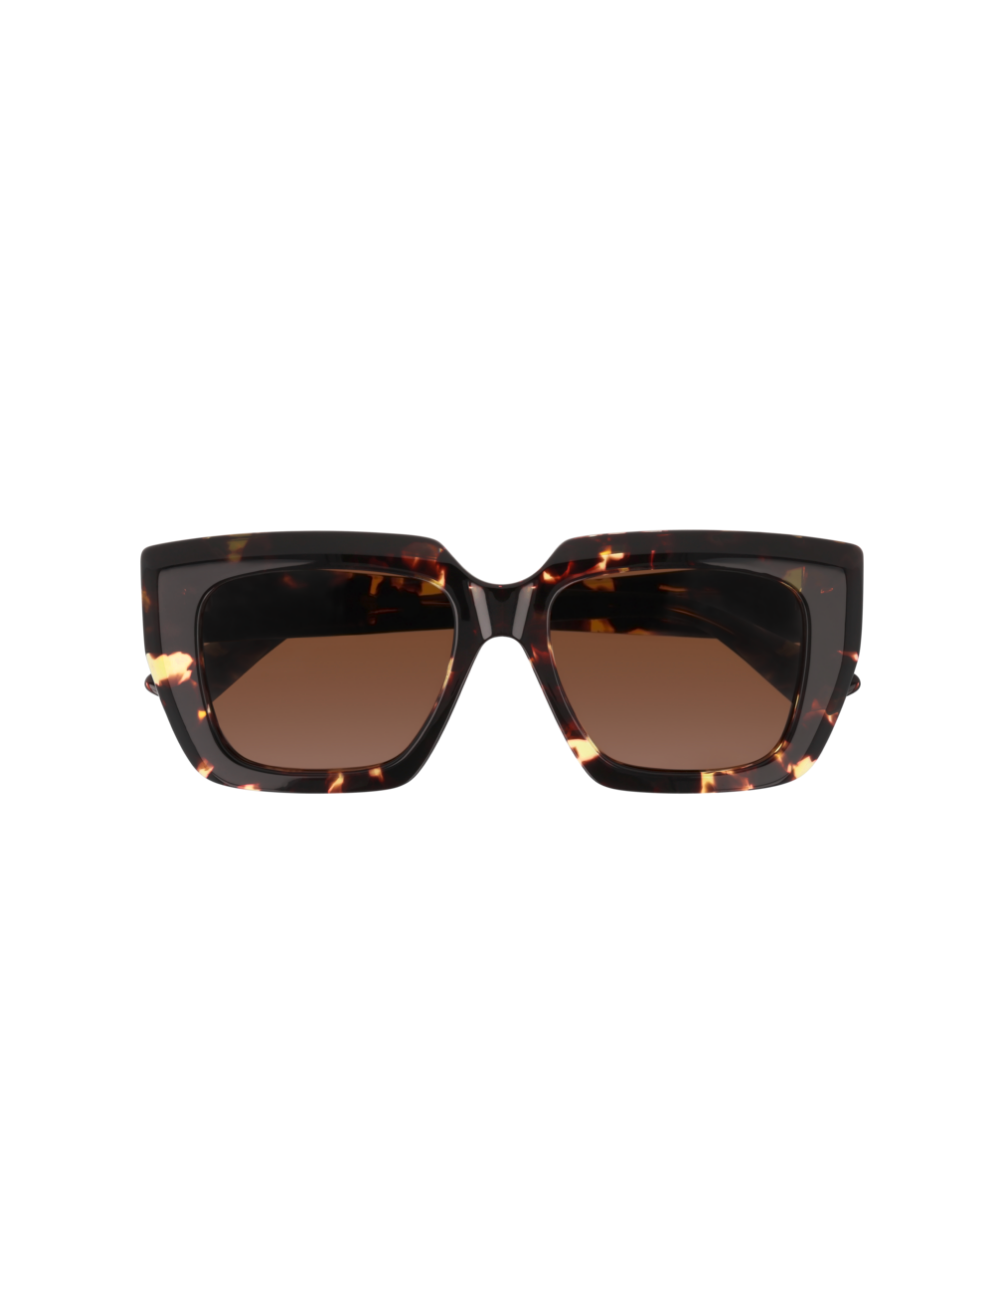 BOTTEGA Veneta bv1030s 002 Sunglasses Glasses Sun Wedges soleil Gafas Sol 